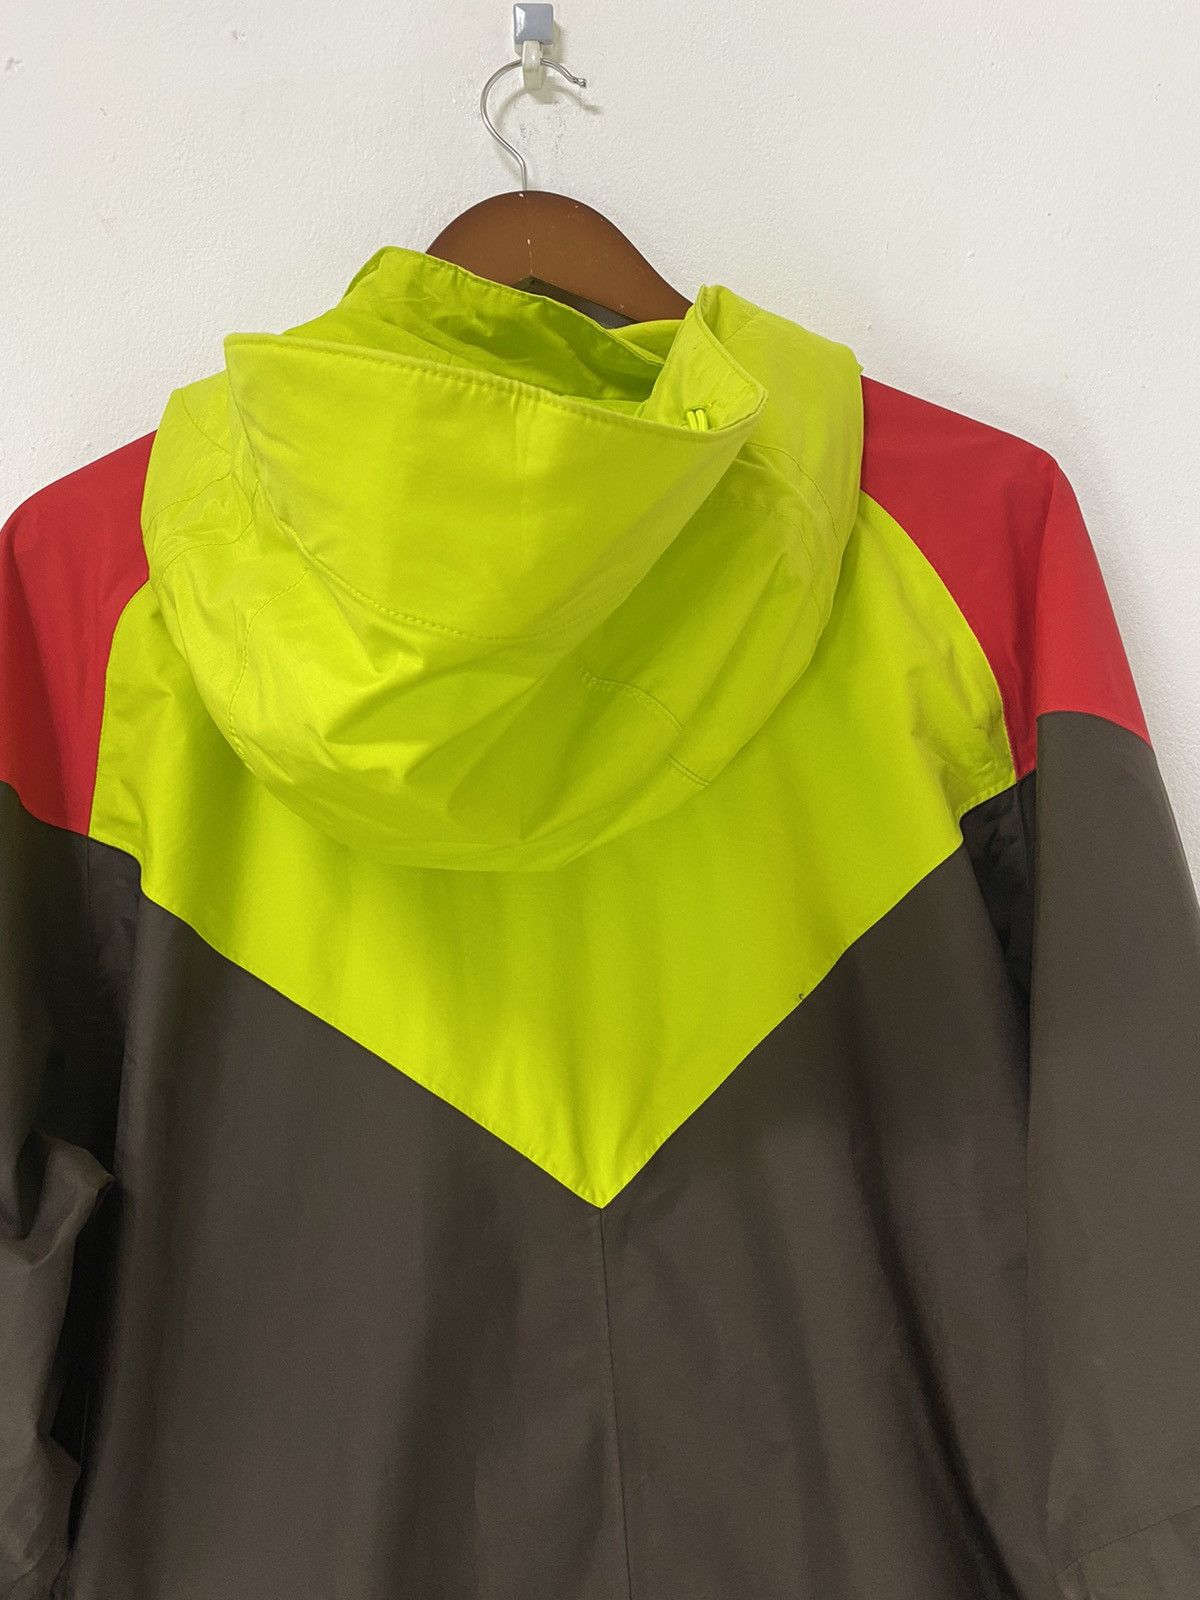 Nike ACG Windbreaker Jacket multicoloured Jacket Design - 7